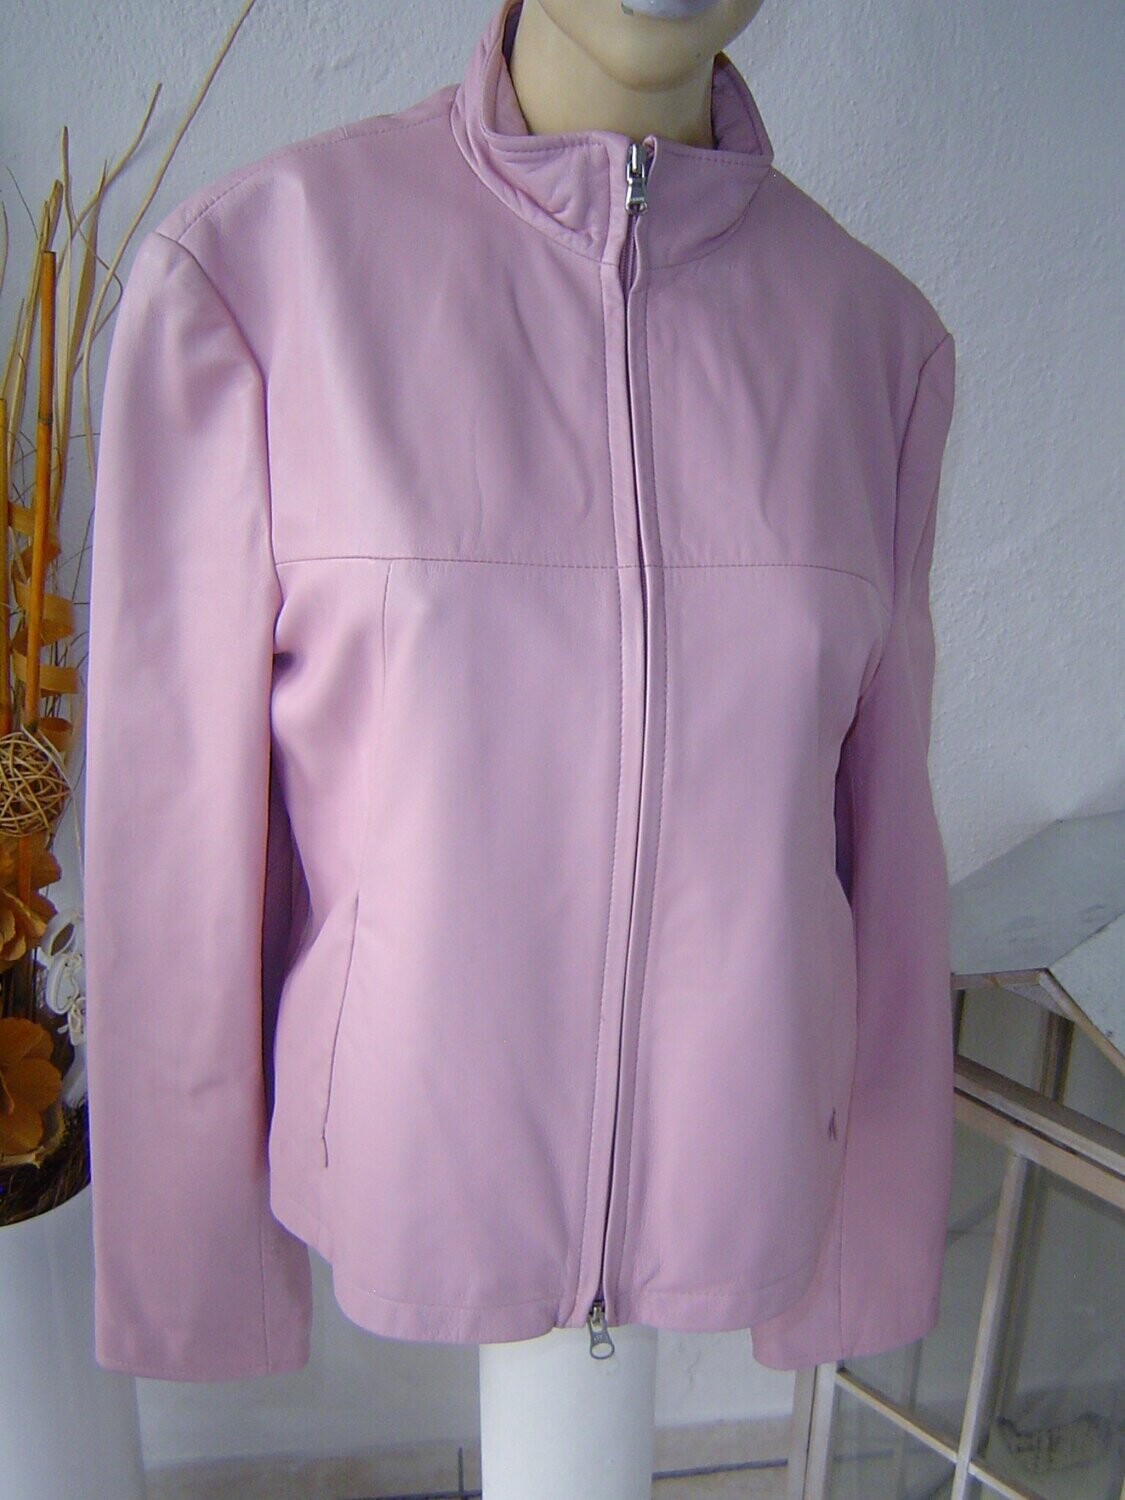 CINQUE Damen Jacke Gr. 40 rosa Lederjacke Leder (Lamm Nappa)